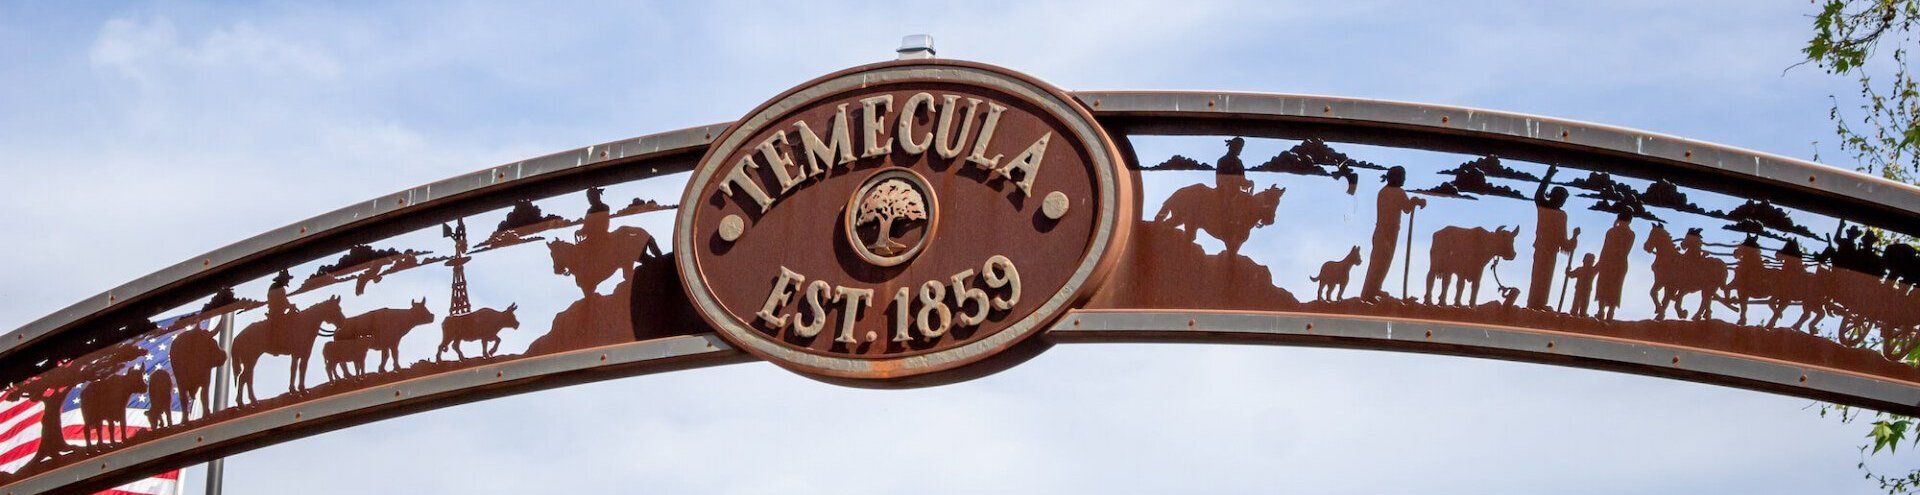 Temecula limo wine tour services